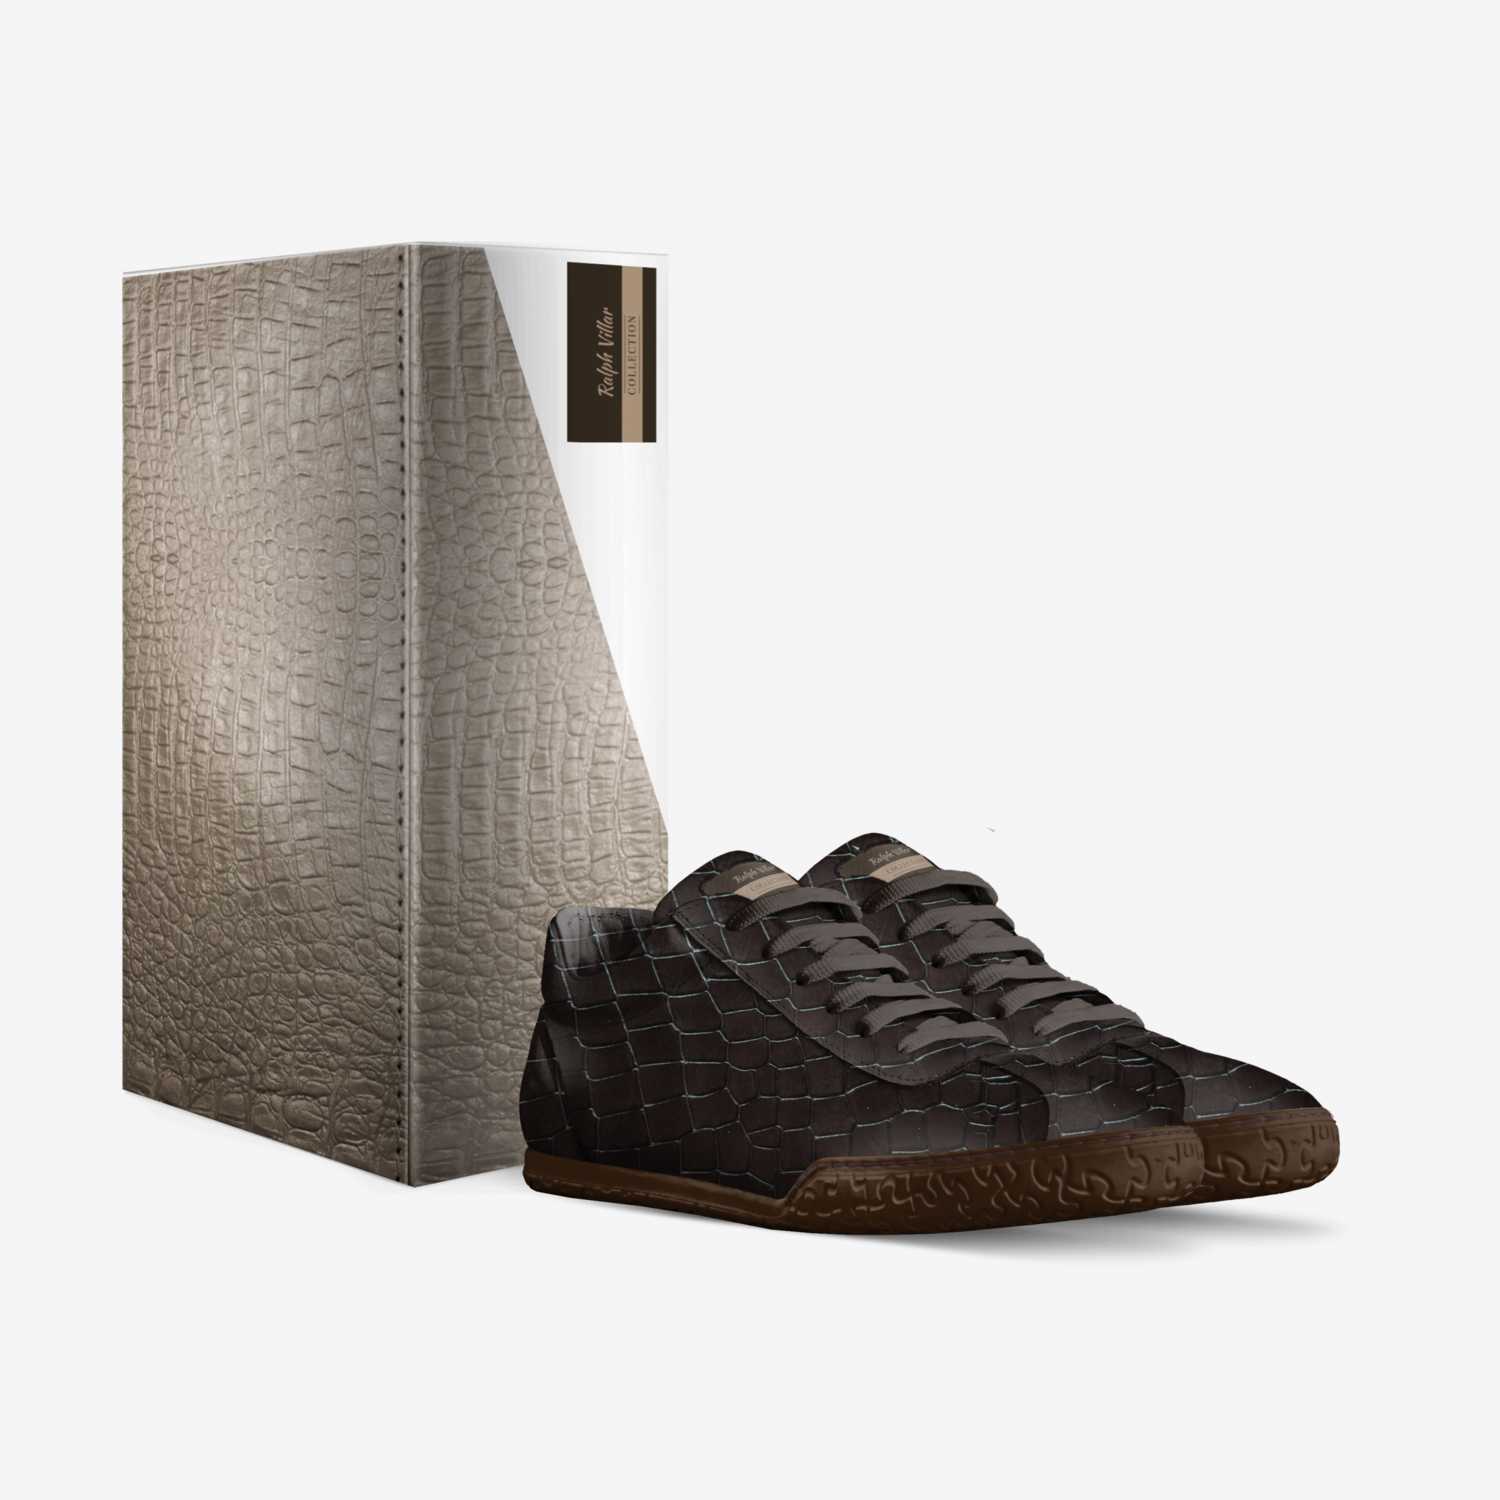 Ralph Villar custom made in Italy shoes by Rafael Villar | Box view